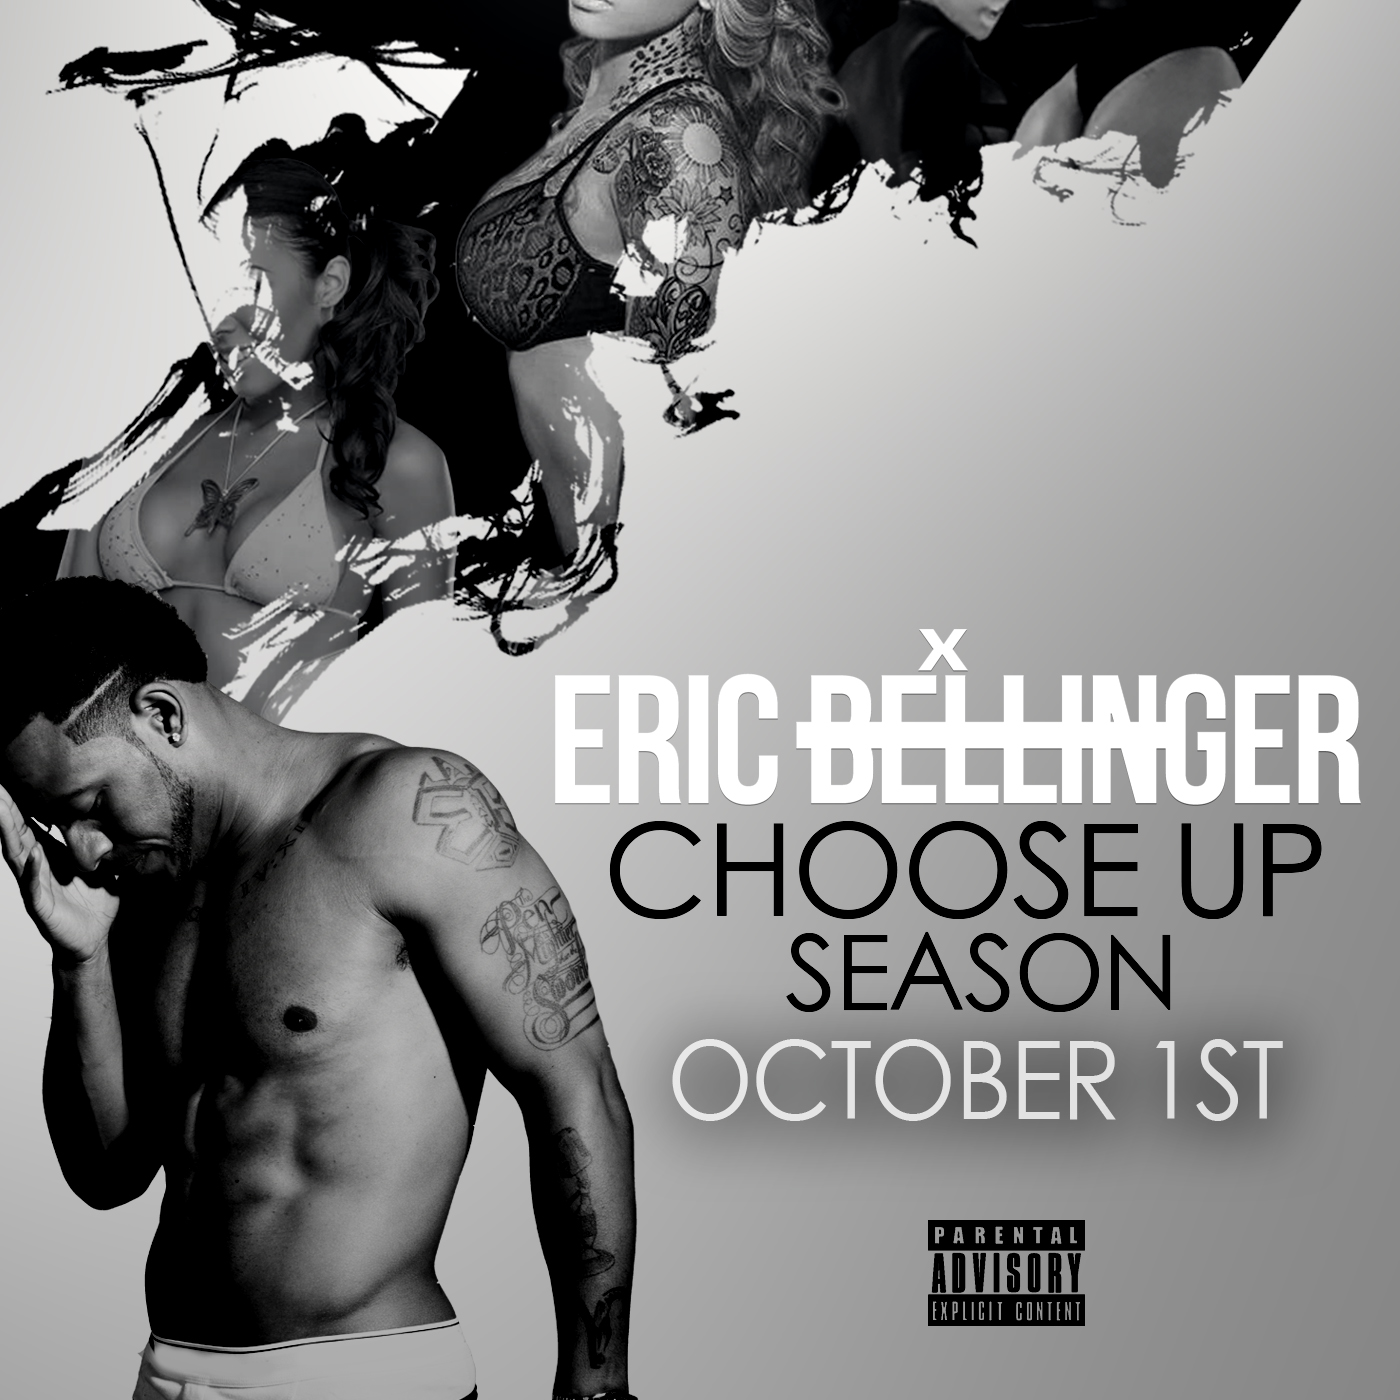 New Music: Eric Bellinger "Awkward" featuring The Game + "Choose Up Season" Mixtape Trailer